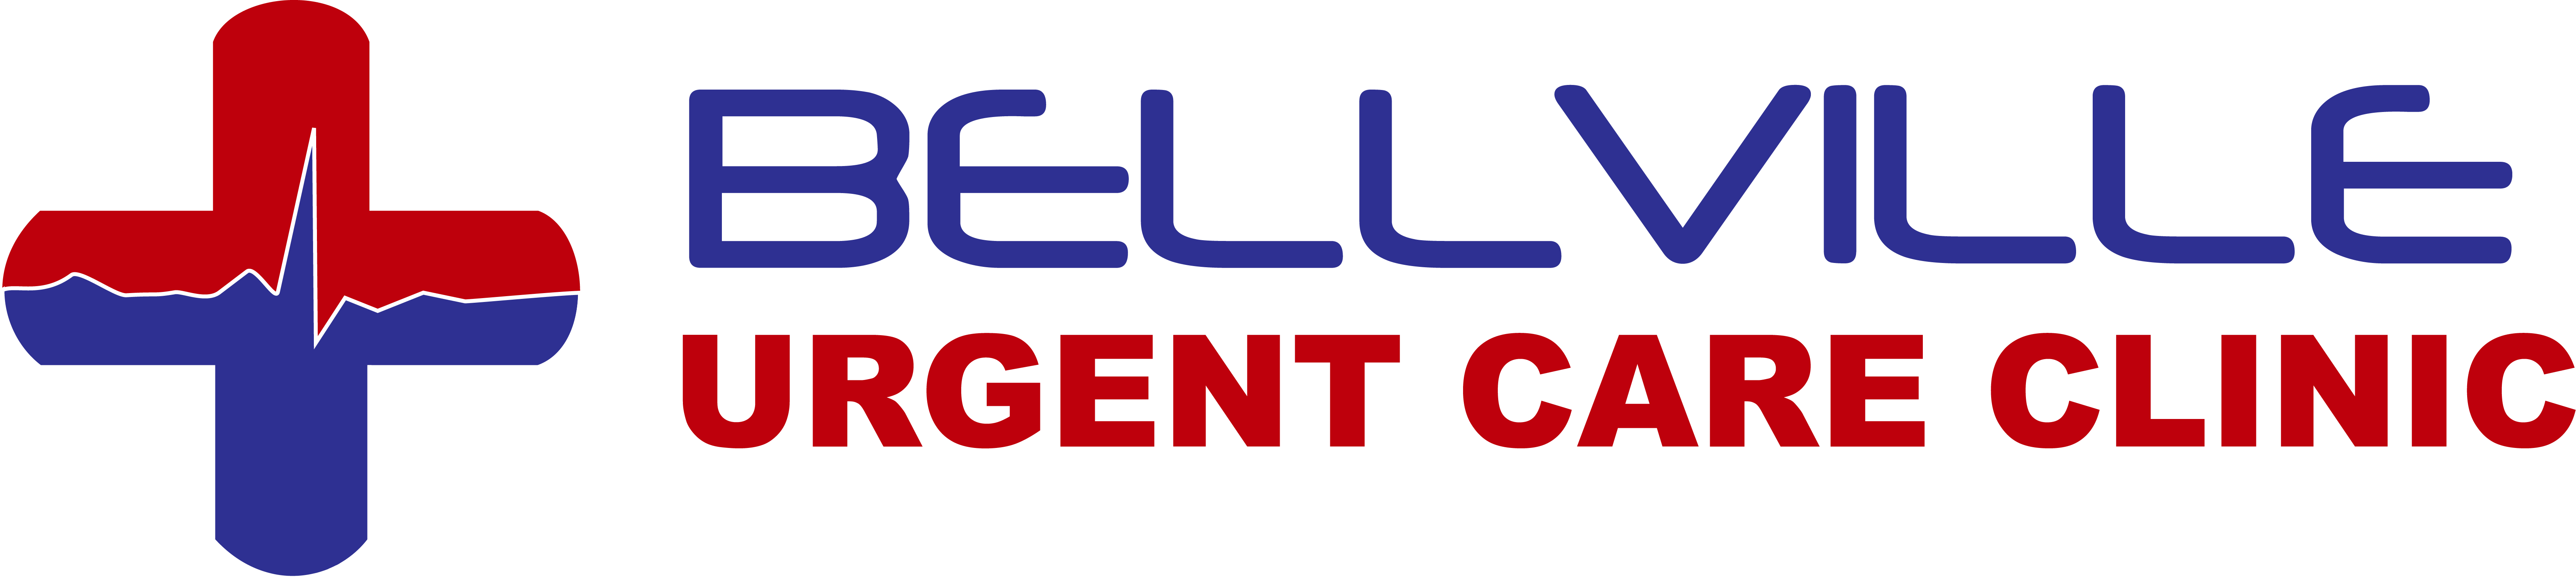 Bellville Urgent Care - Katy Logo